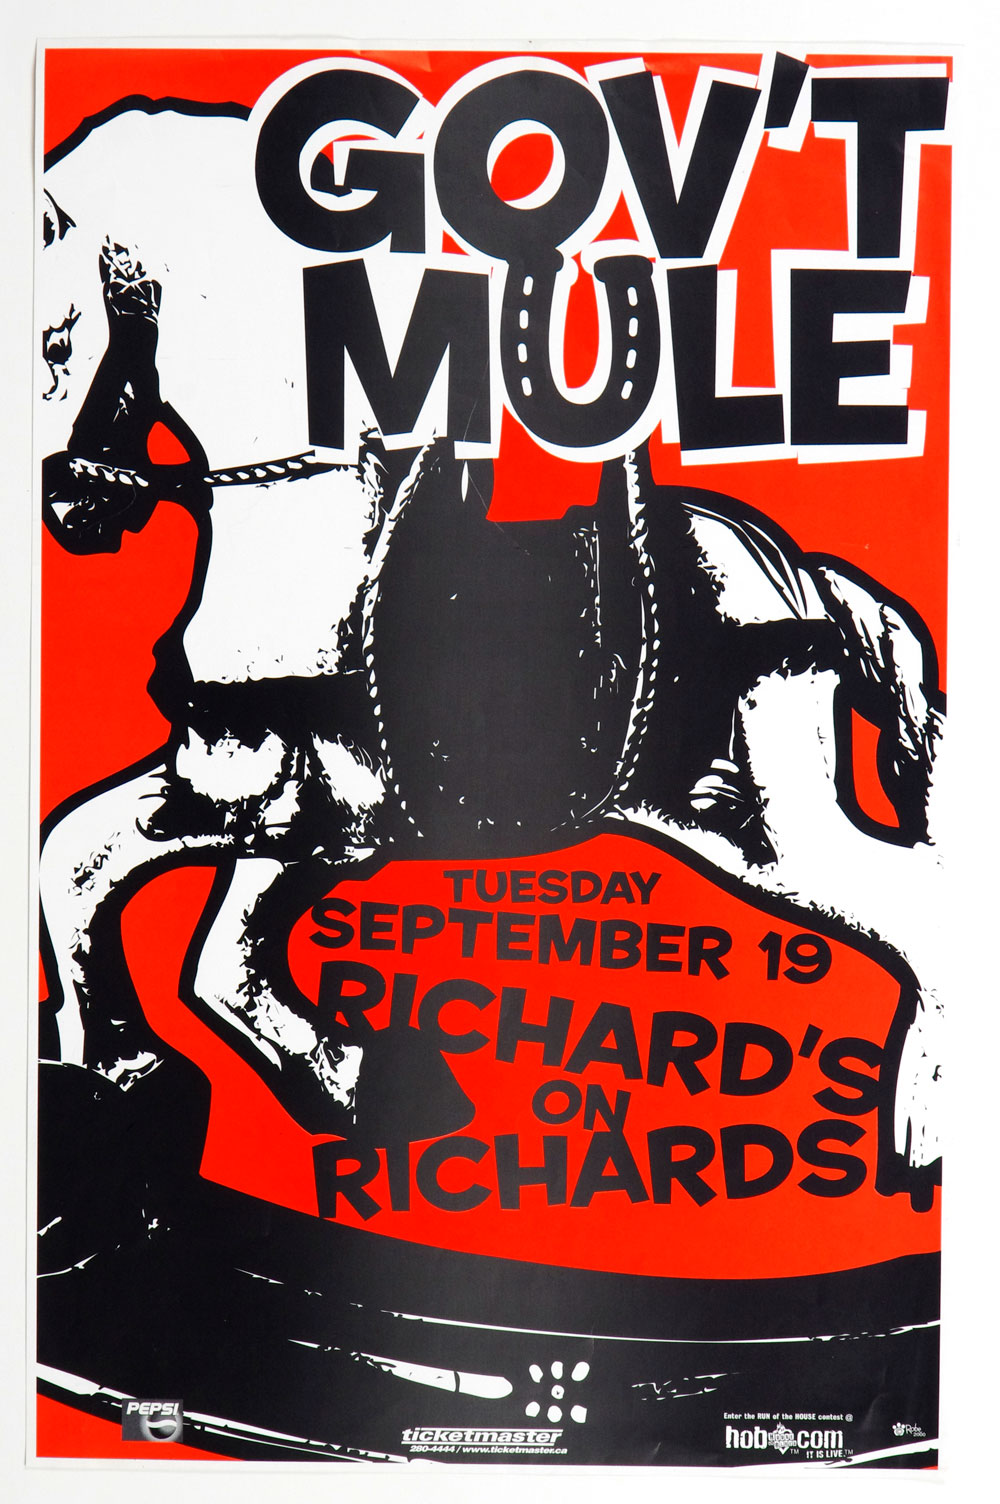 Gov't Mule Poster 2004 Sep 19 Richard's on Richard Vancouver